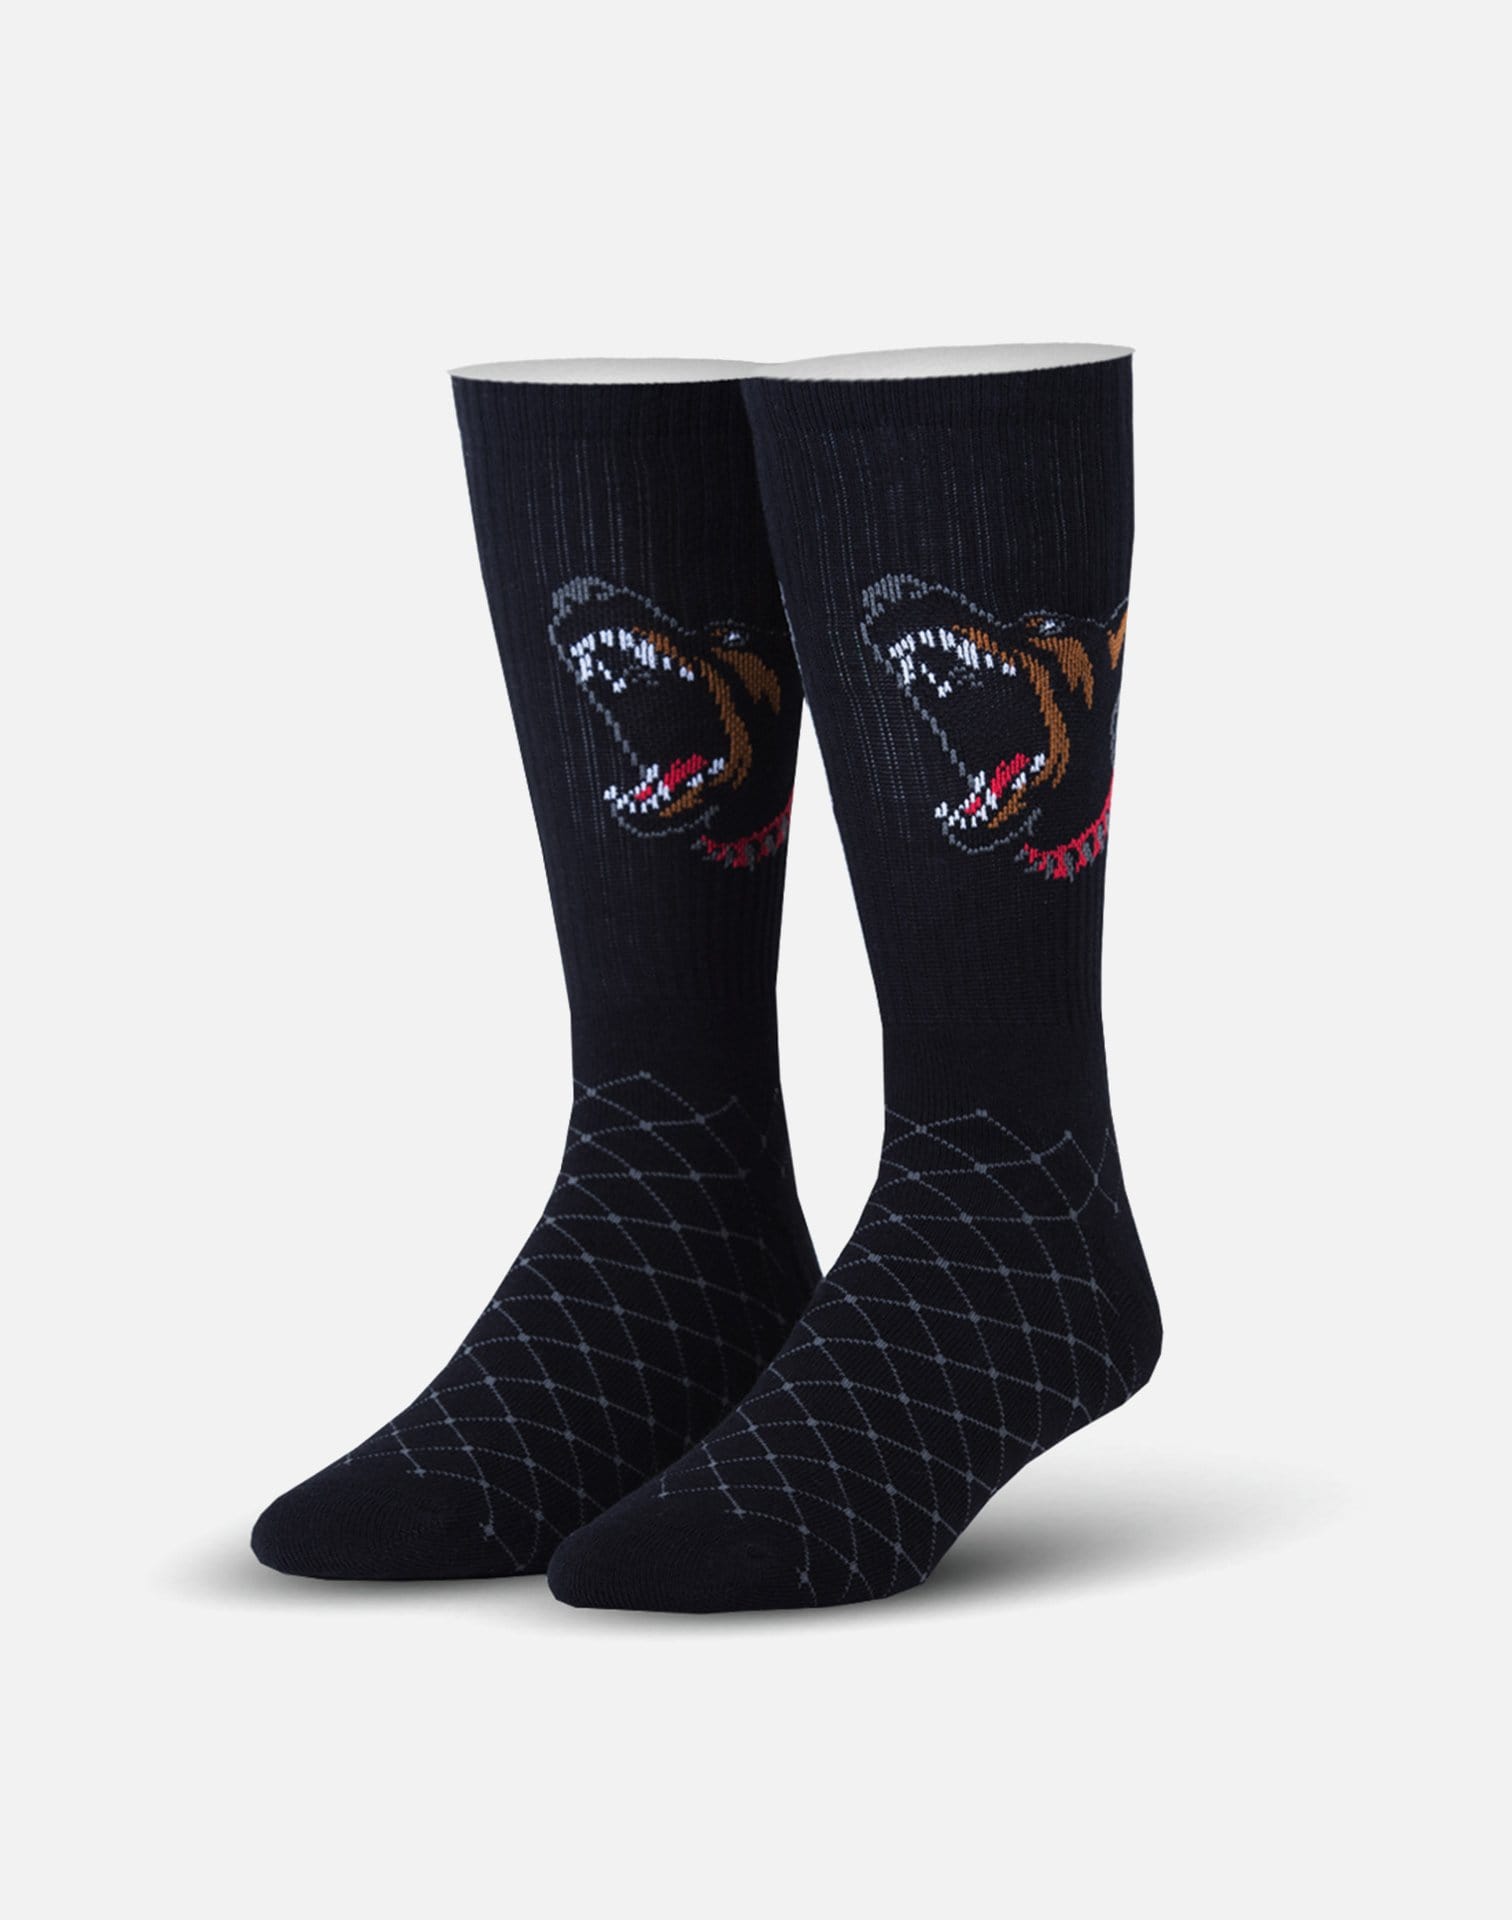 Odd Sox Vicious Socks